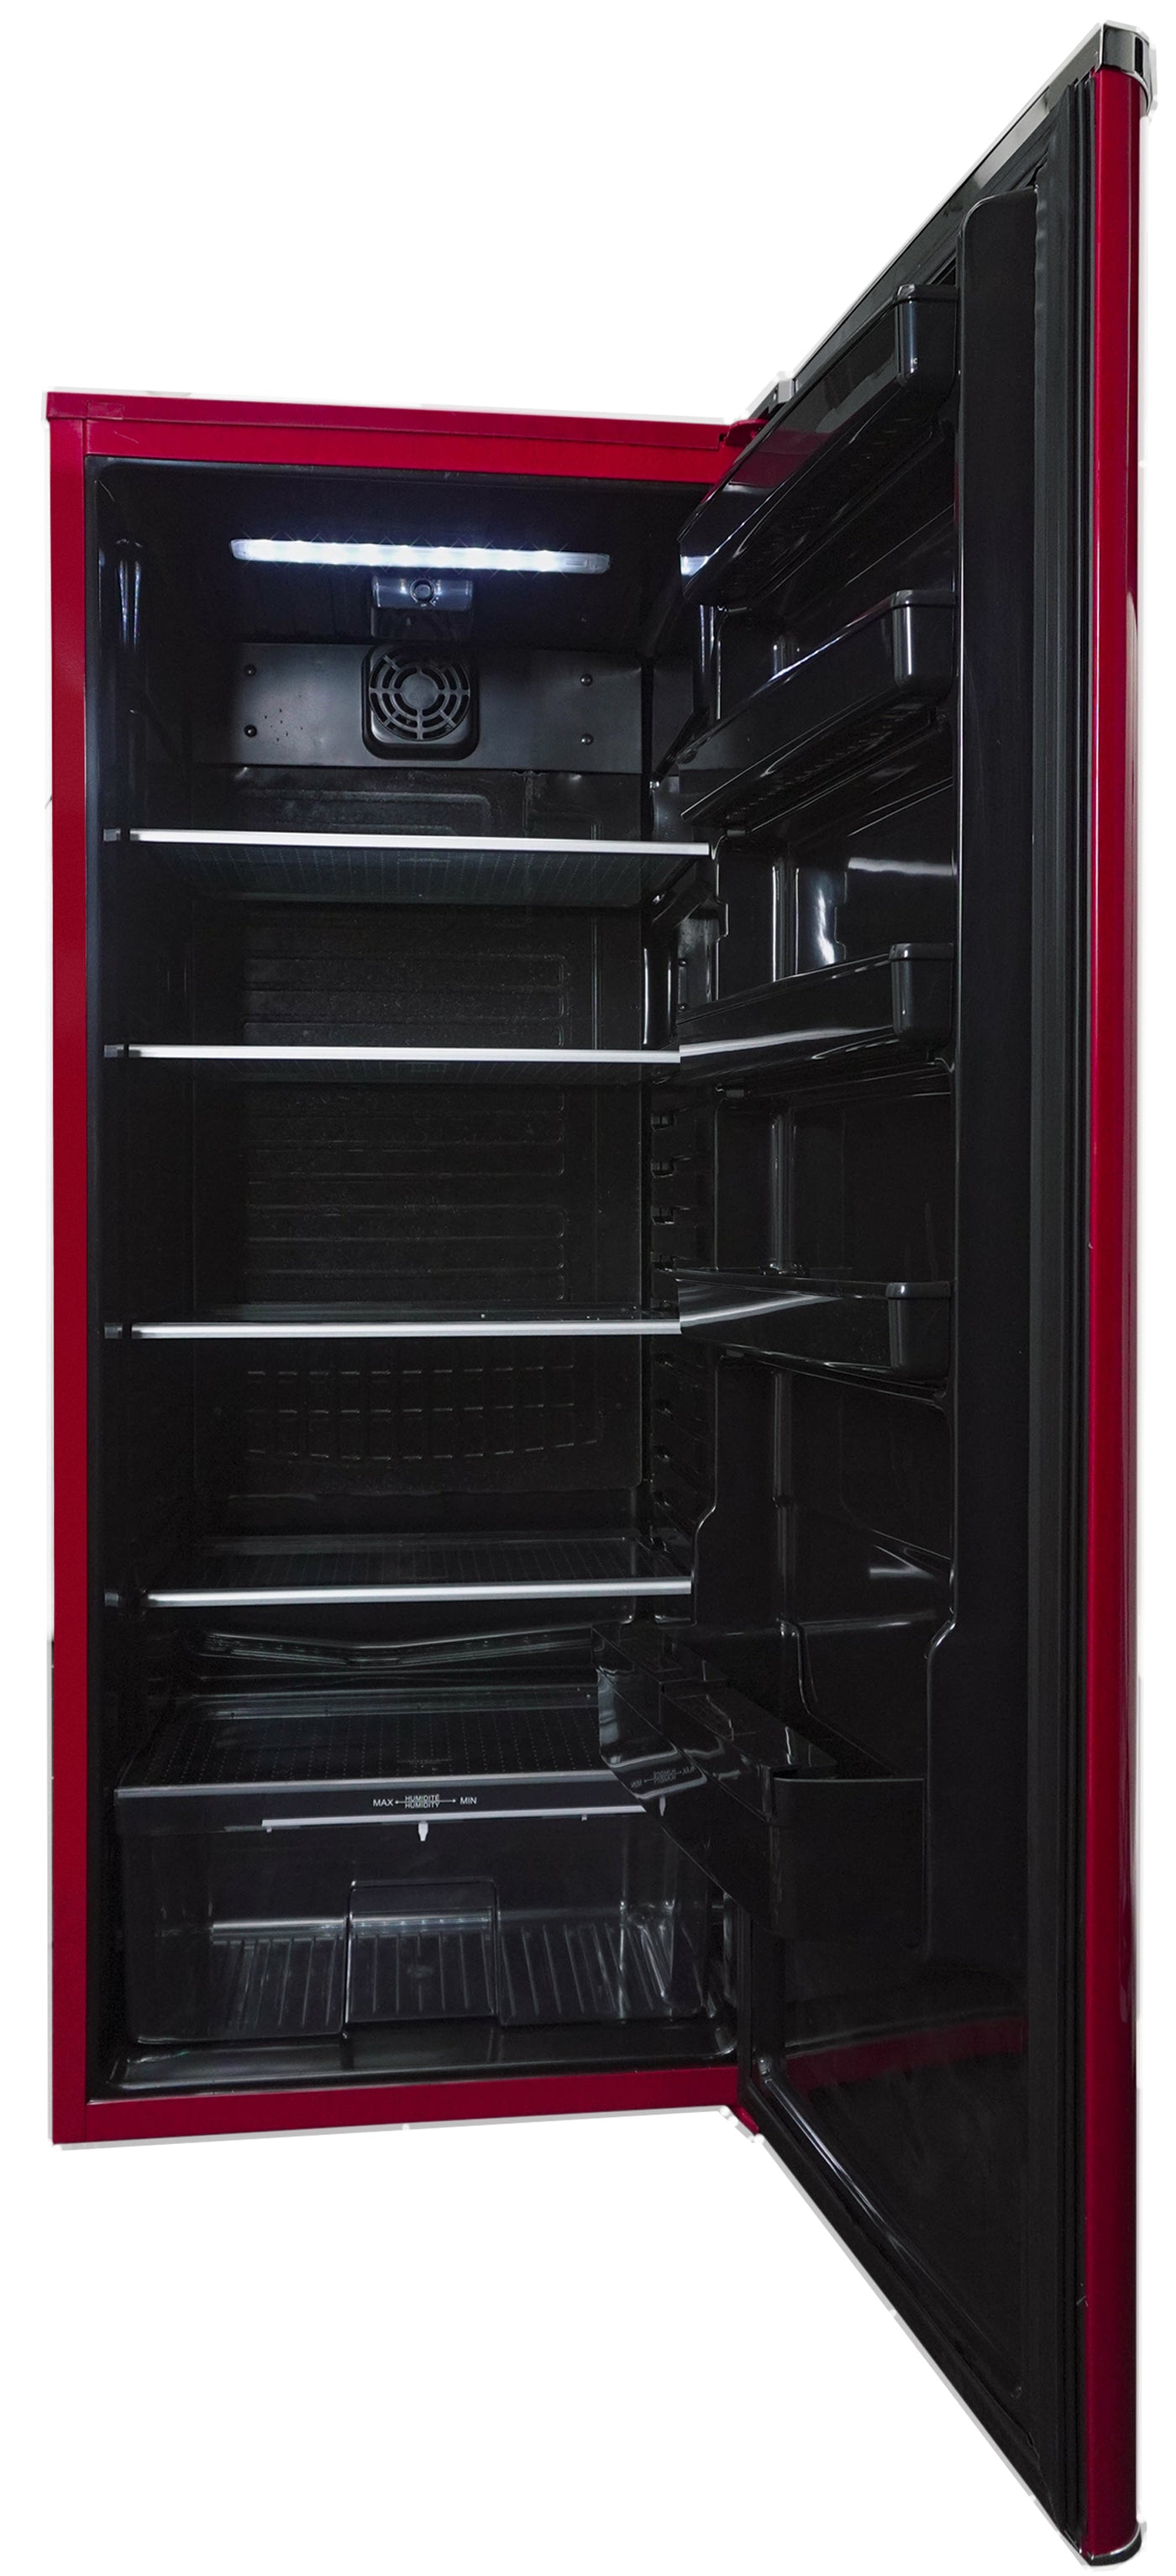 Danby Red Apartment Size Refrigerator (11.0 Cu. Ft.) - DAR110A3LDB